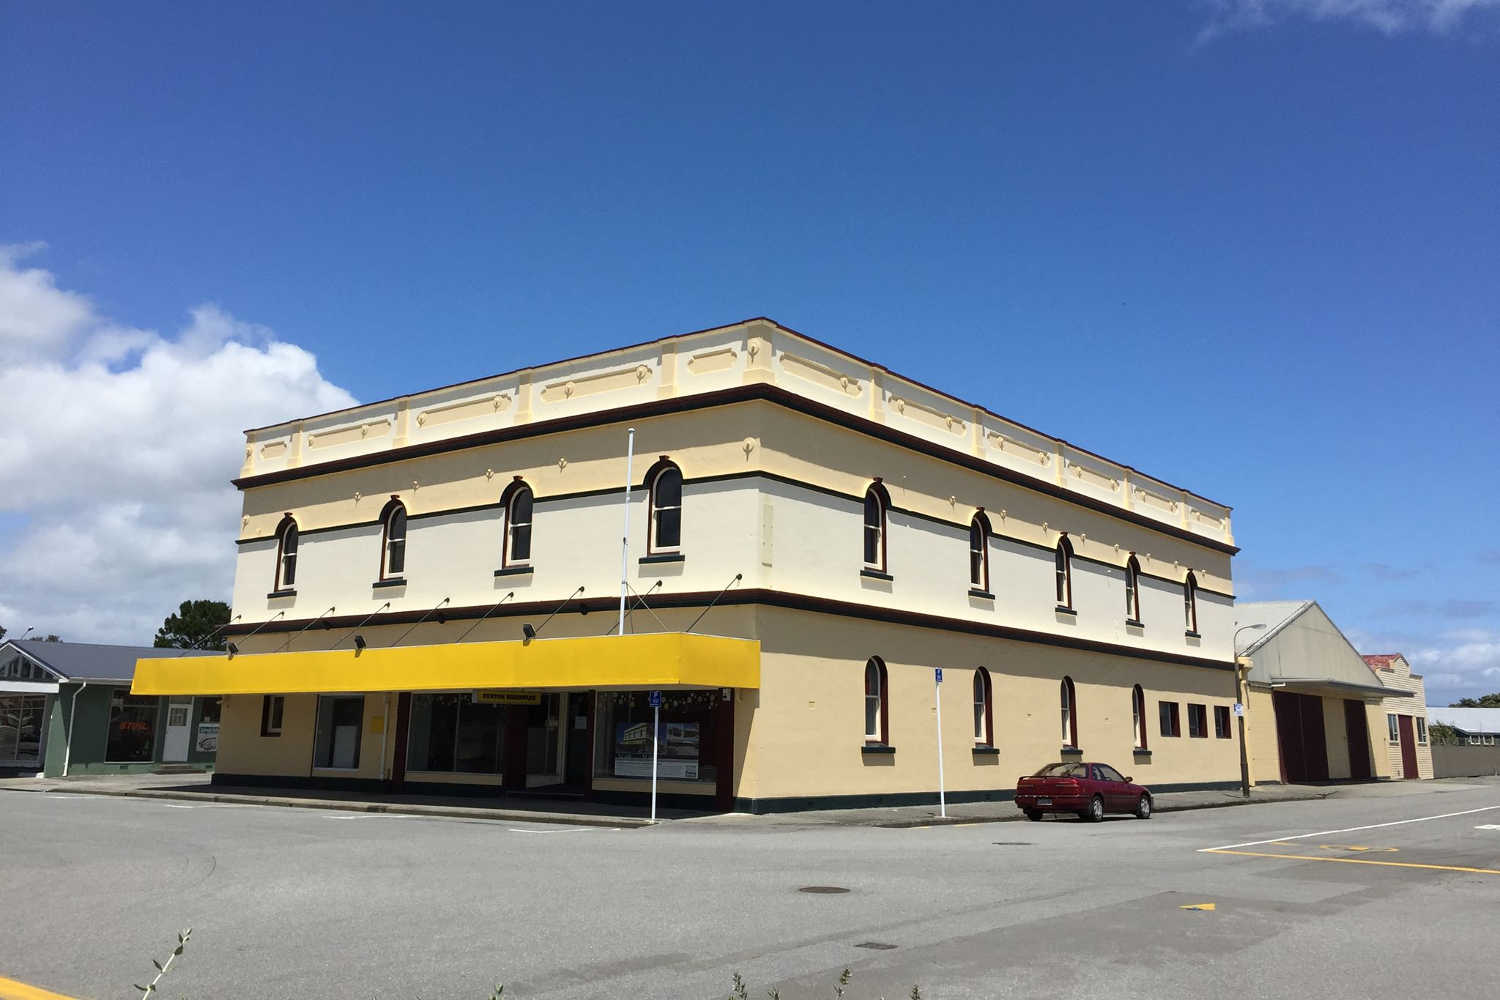 Okitiki building, New Zealand @SaveRentons